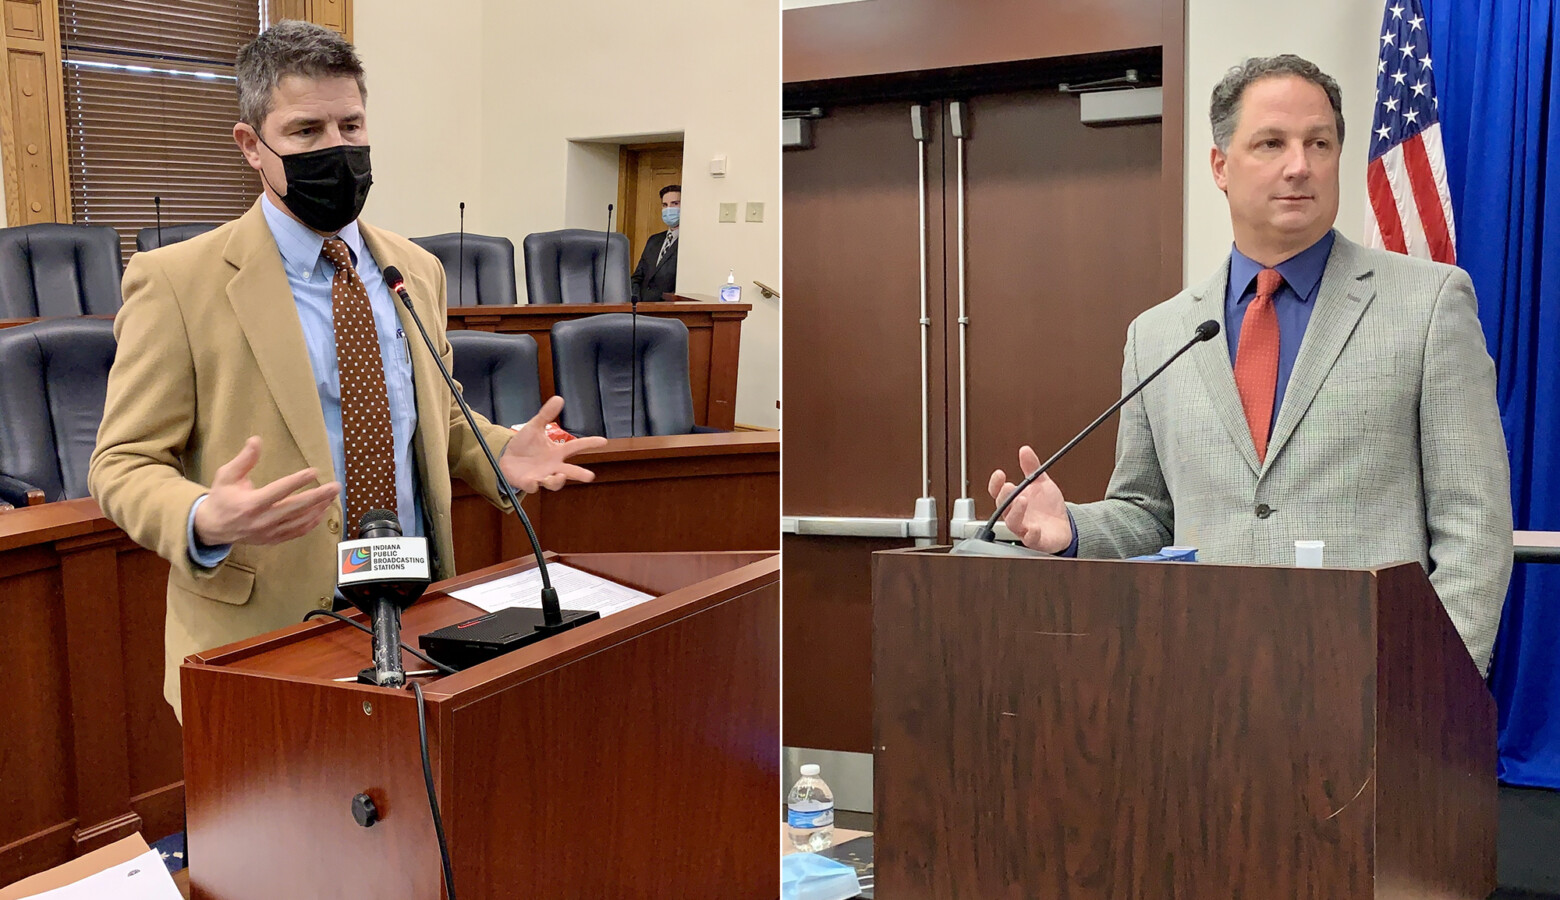 Senate President Pro Tem Rodric Bray (R-Martinsville), left, and House Speaker Todd Huston (R-Fishers), right, speak to reporters. (Brandon Smith/IPB News)